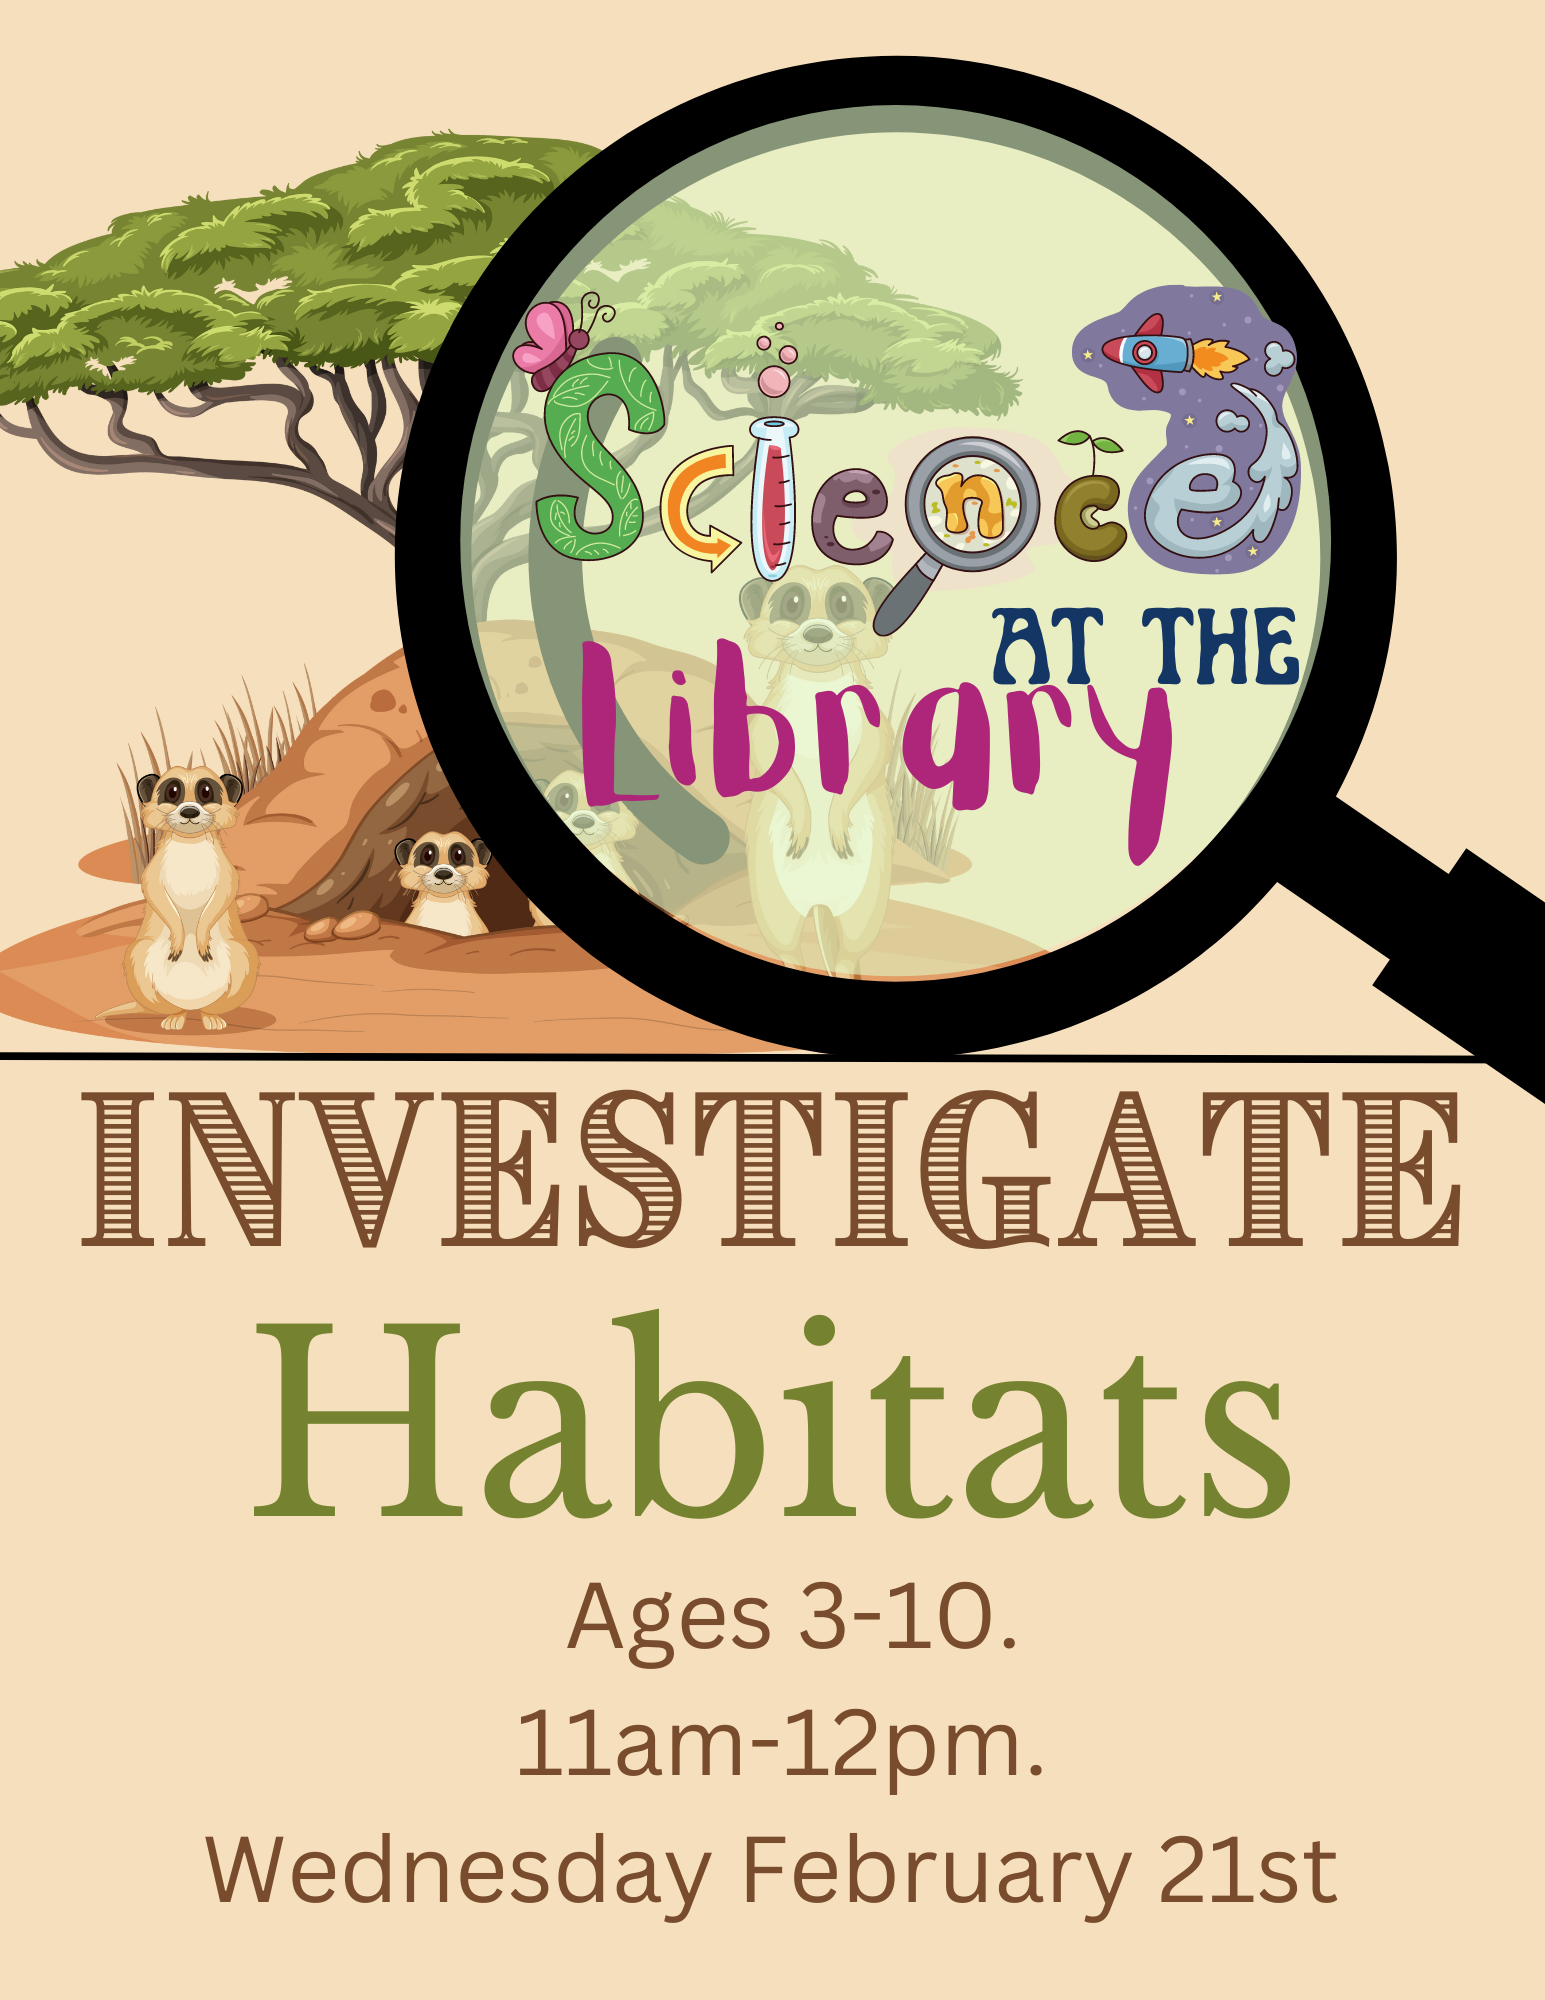 Science at the library: Habitats